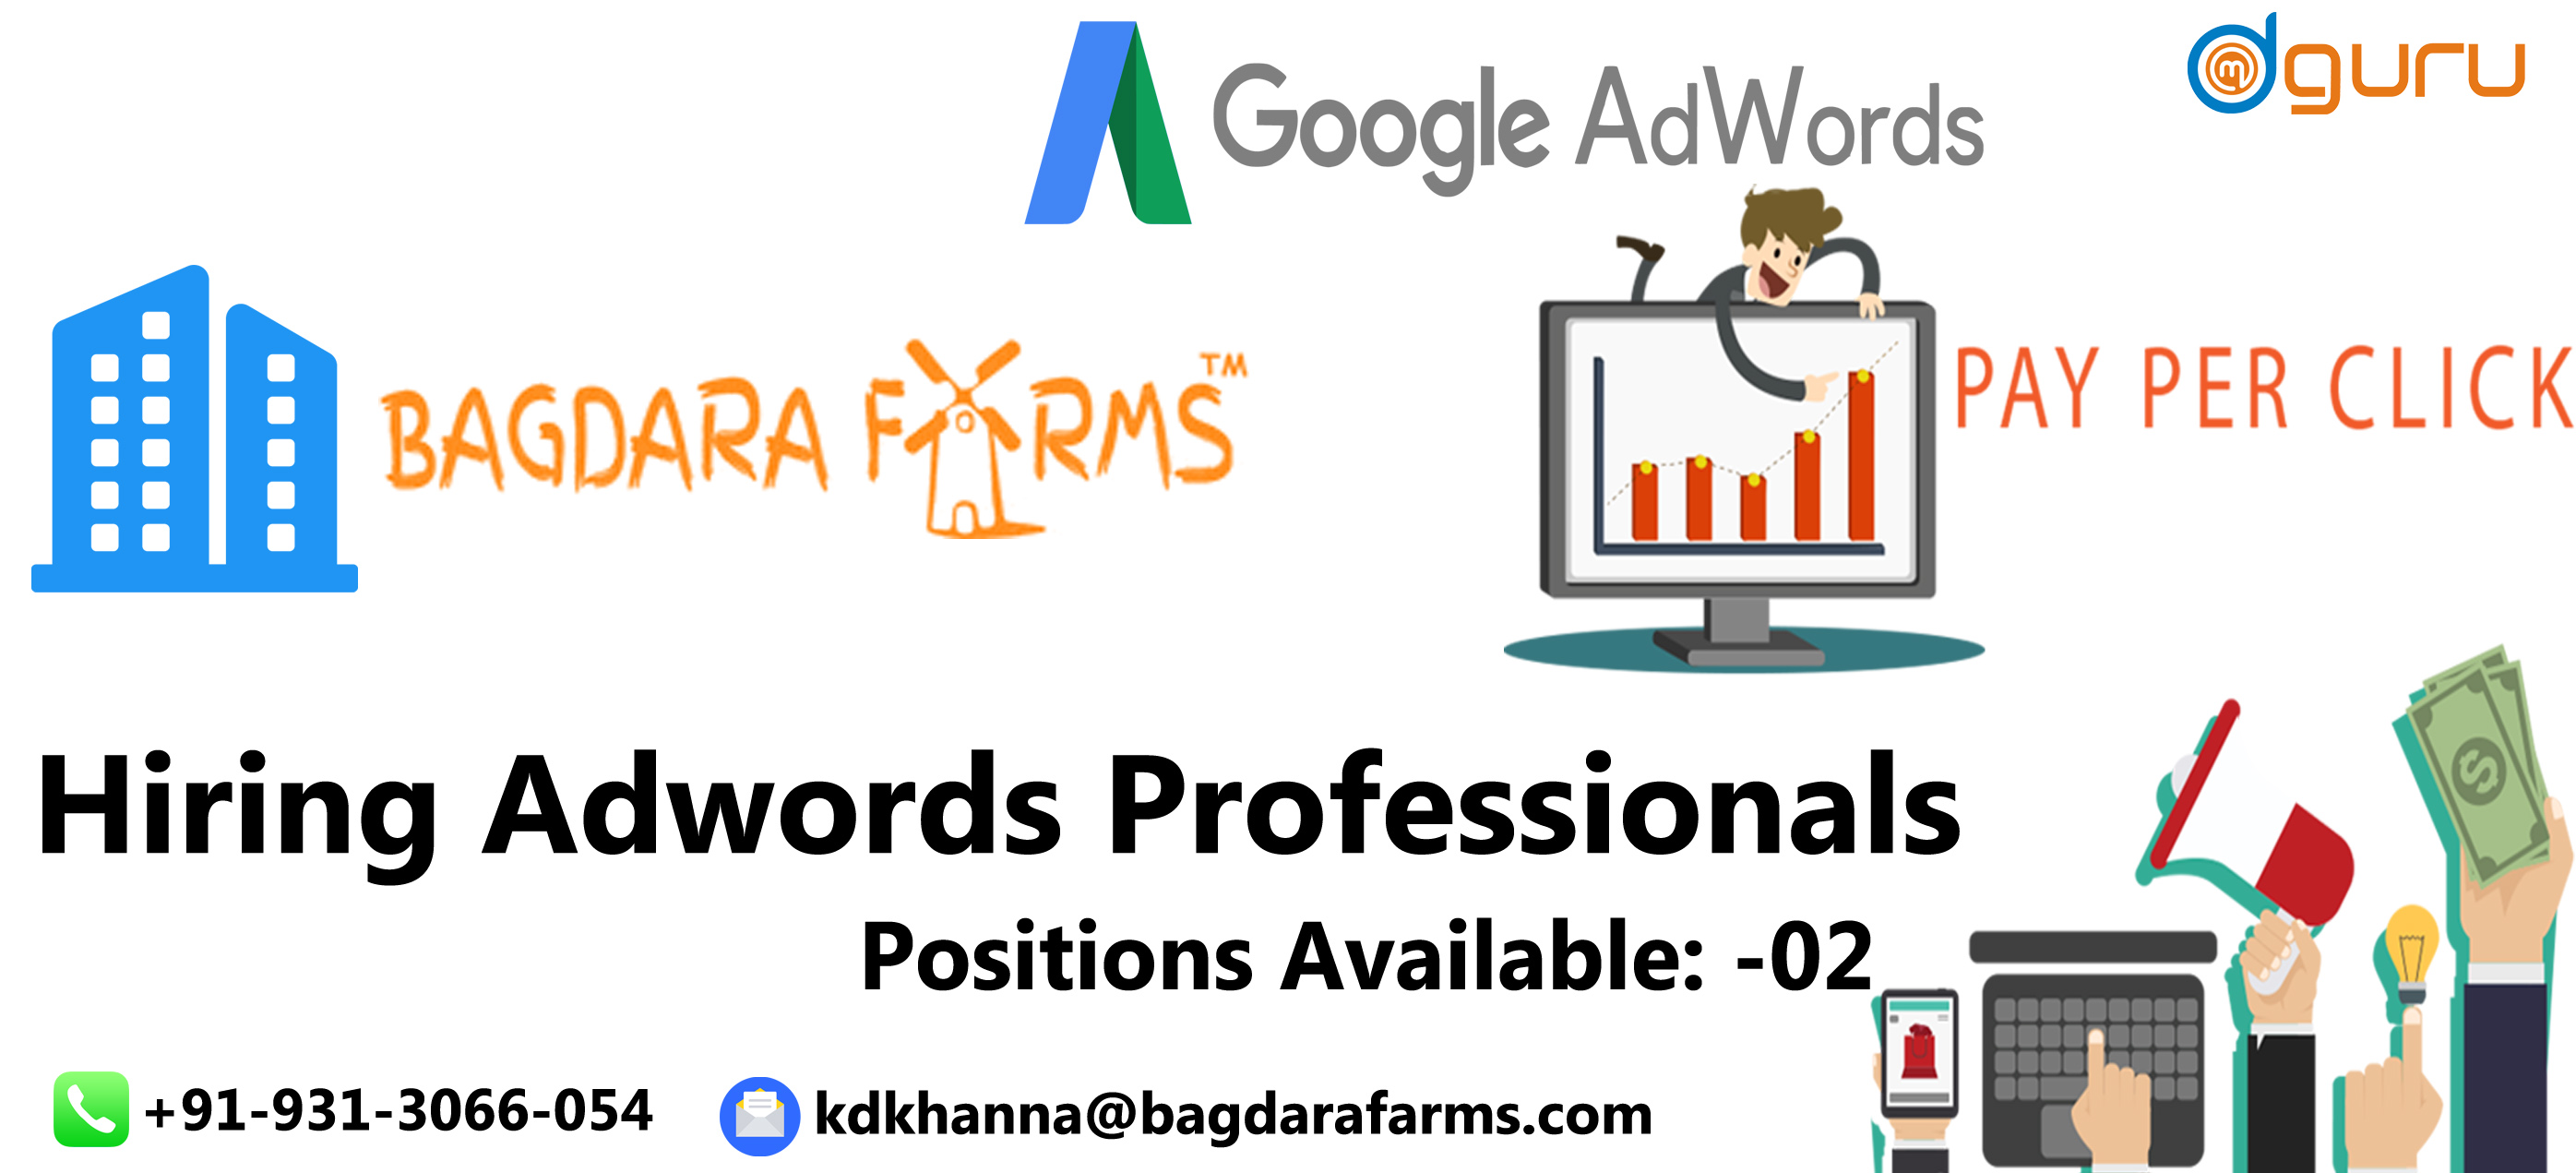 Digital Marketing Expert Vacancy in Bagdara Farms, New Delhi - India